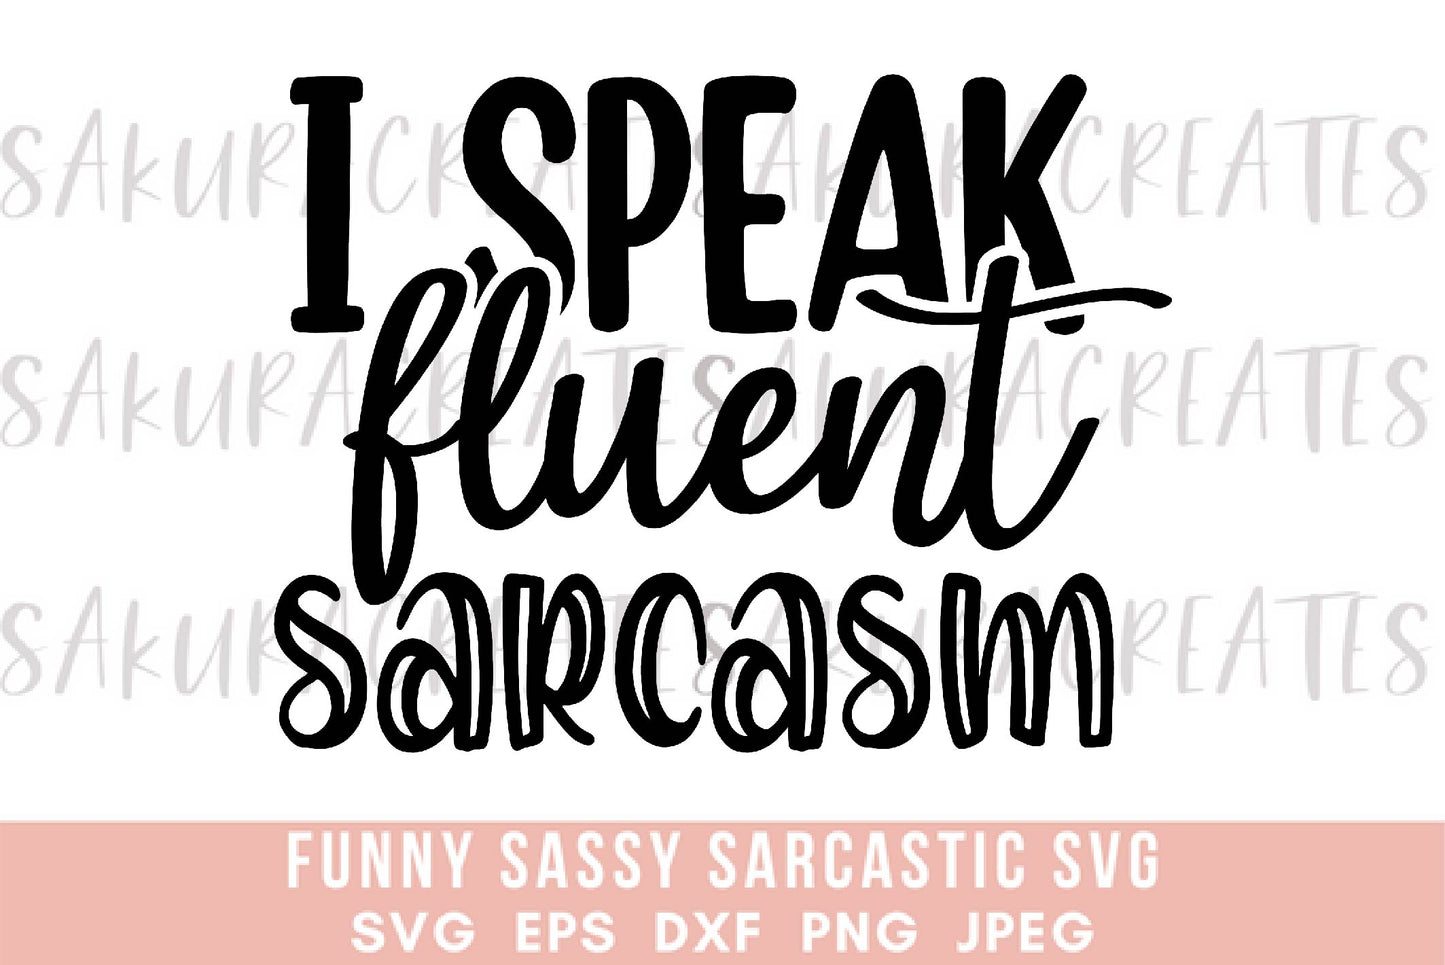 I speak fluent sarcasm SVG DXF EPS PNG JPEG SVG cut file silhouette cricut funny sarcastic sassy quotes sayings